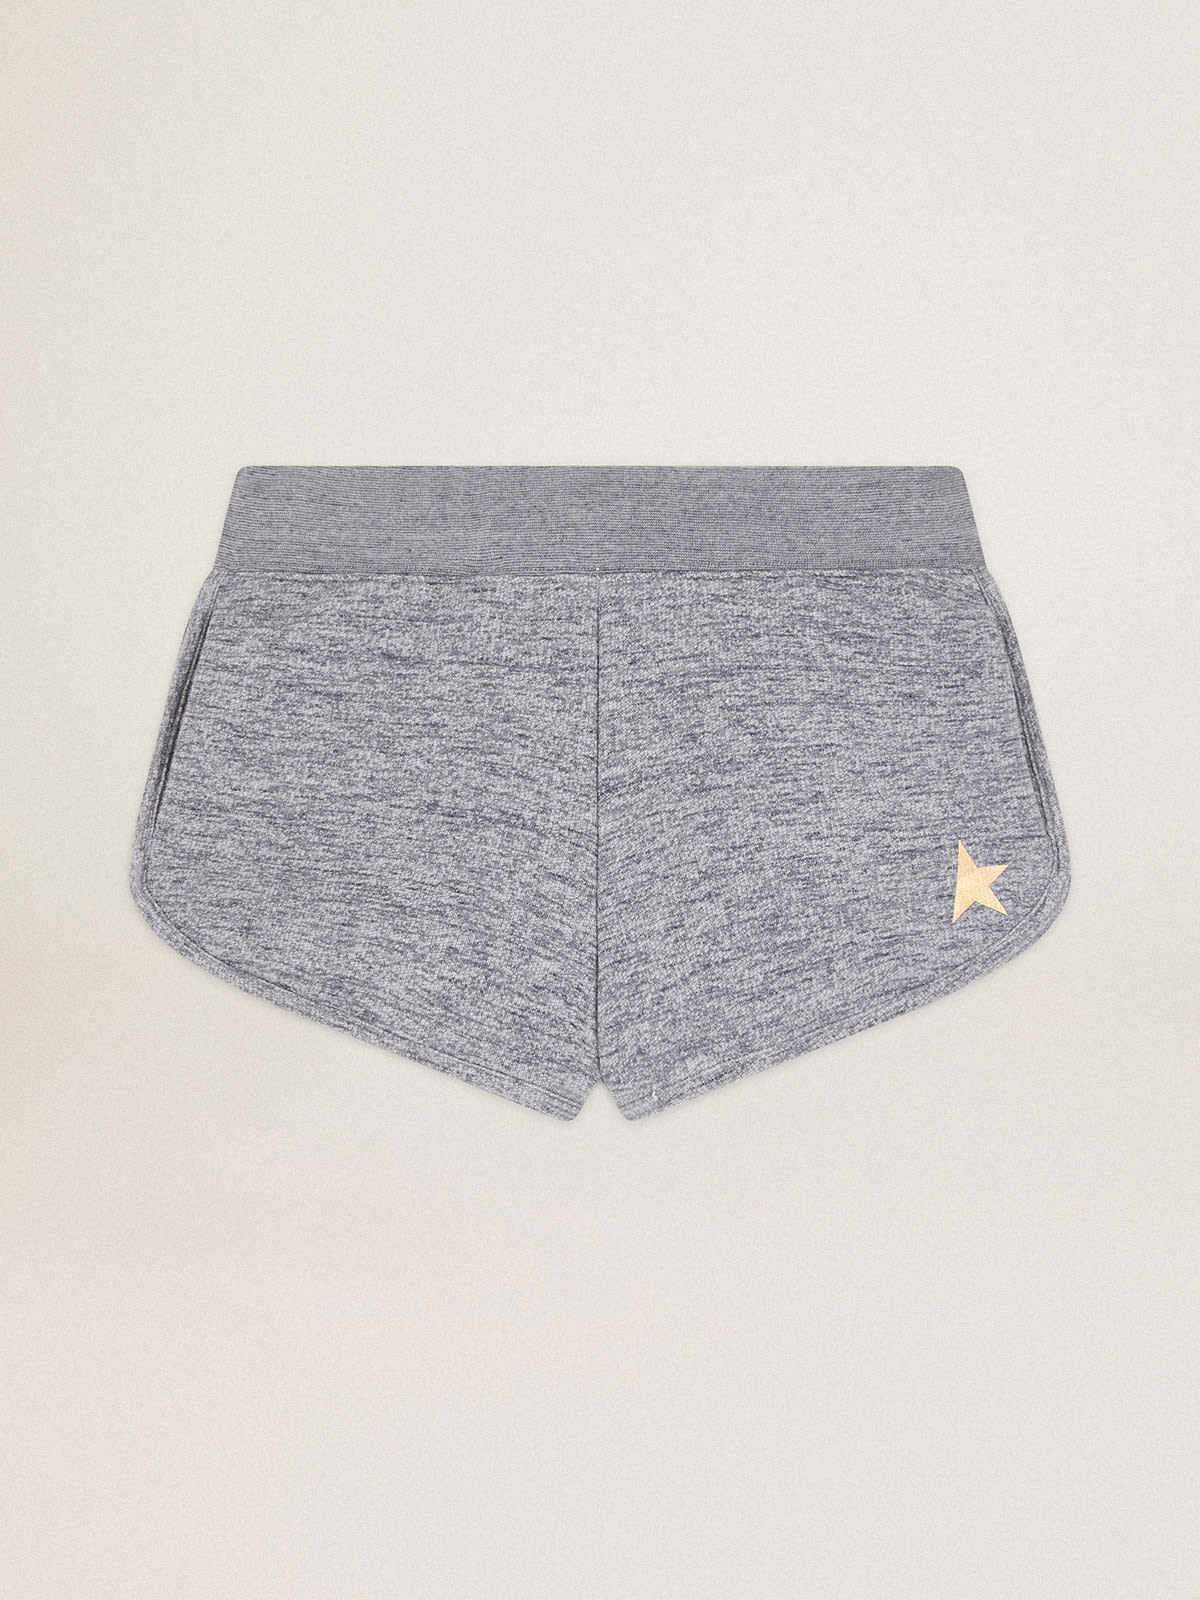 Golden Goose - Pantalón corto en color gris jaspeado con estrella dorada in 